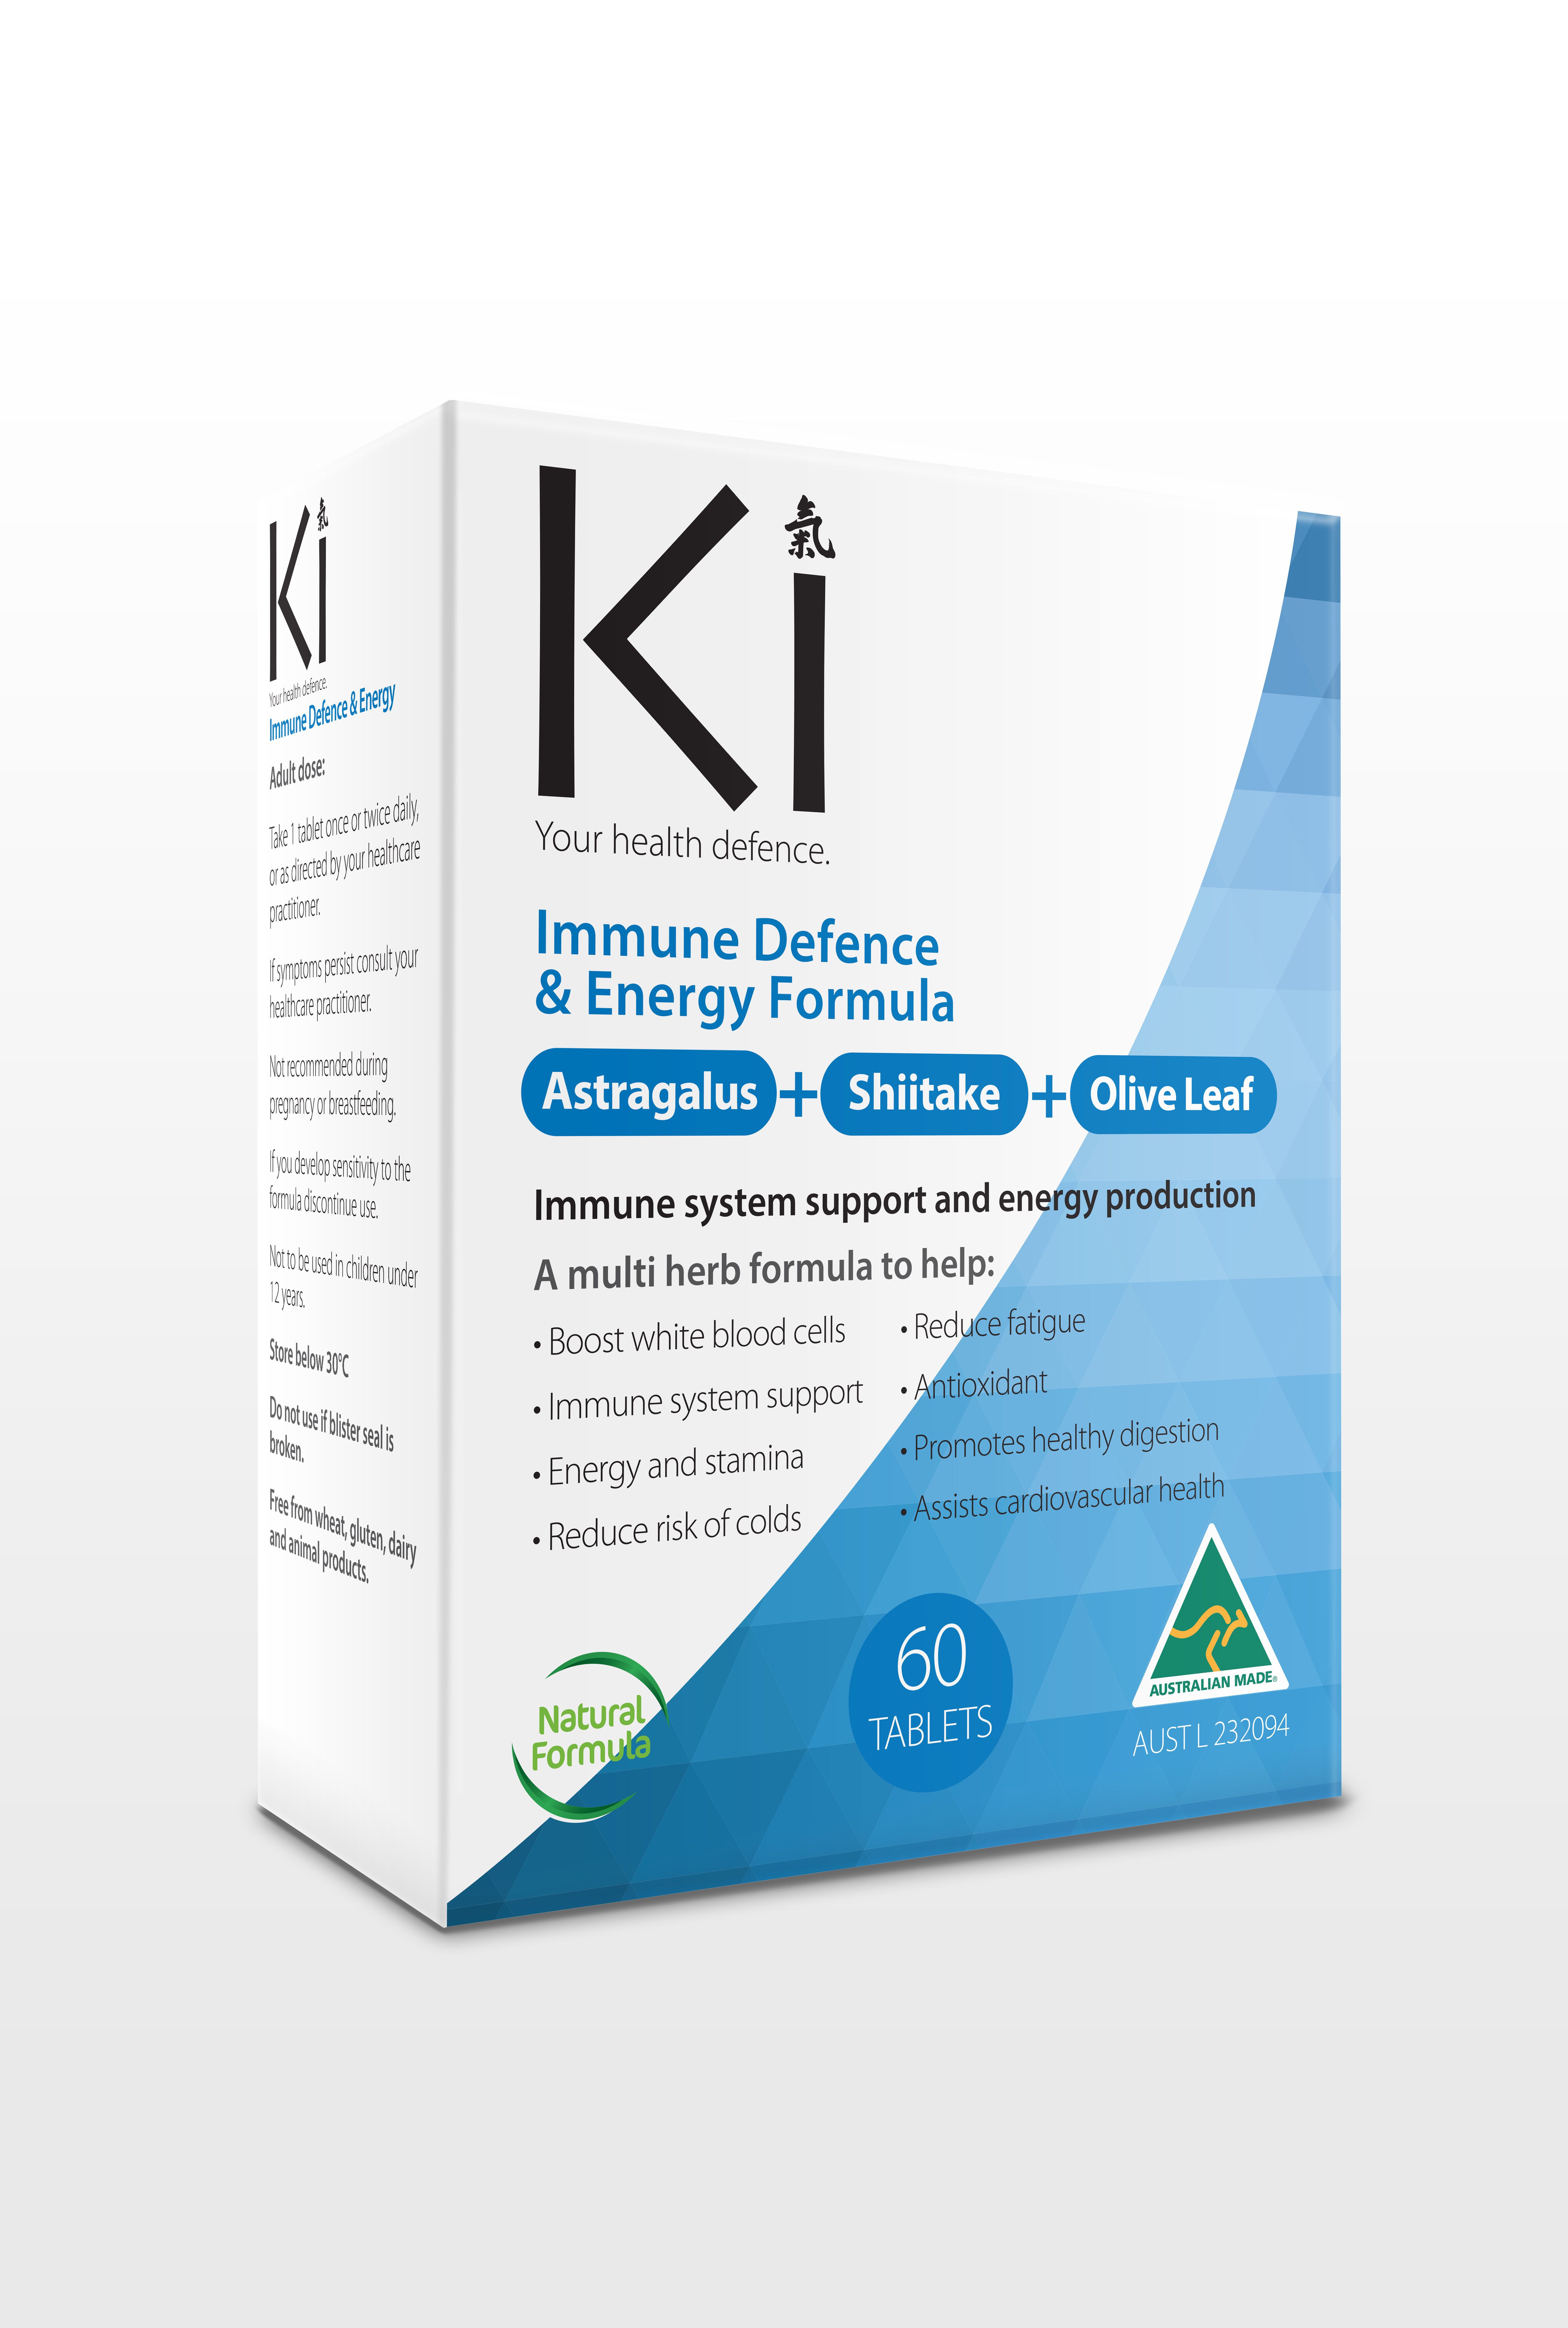 Ki Immune Defence & Energy Formula - The Australian Made Campaign